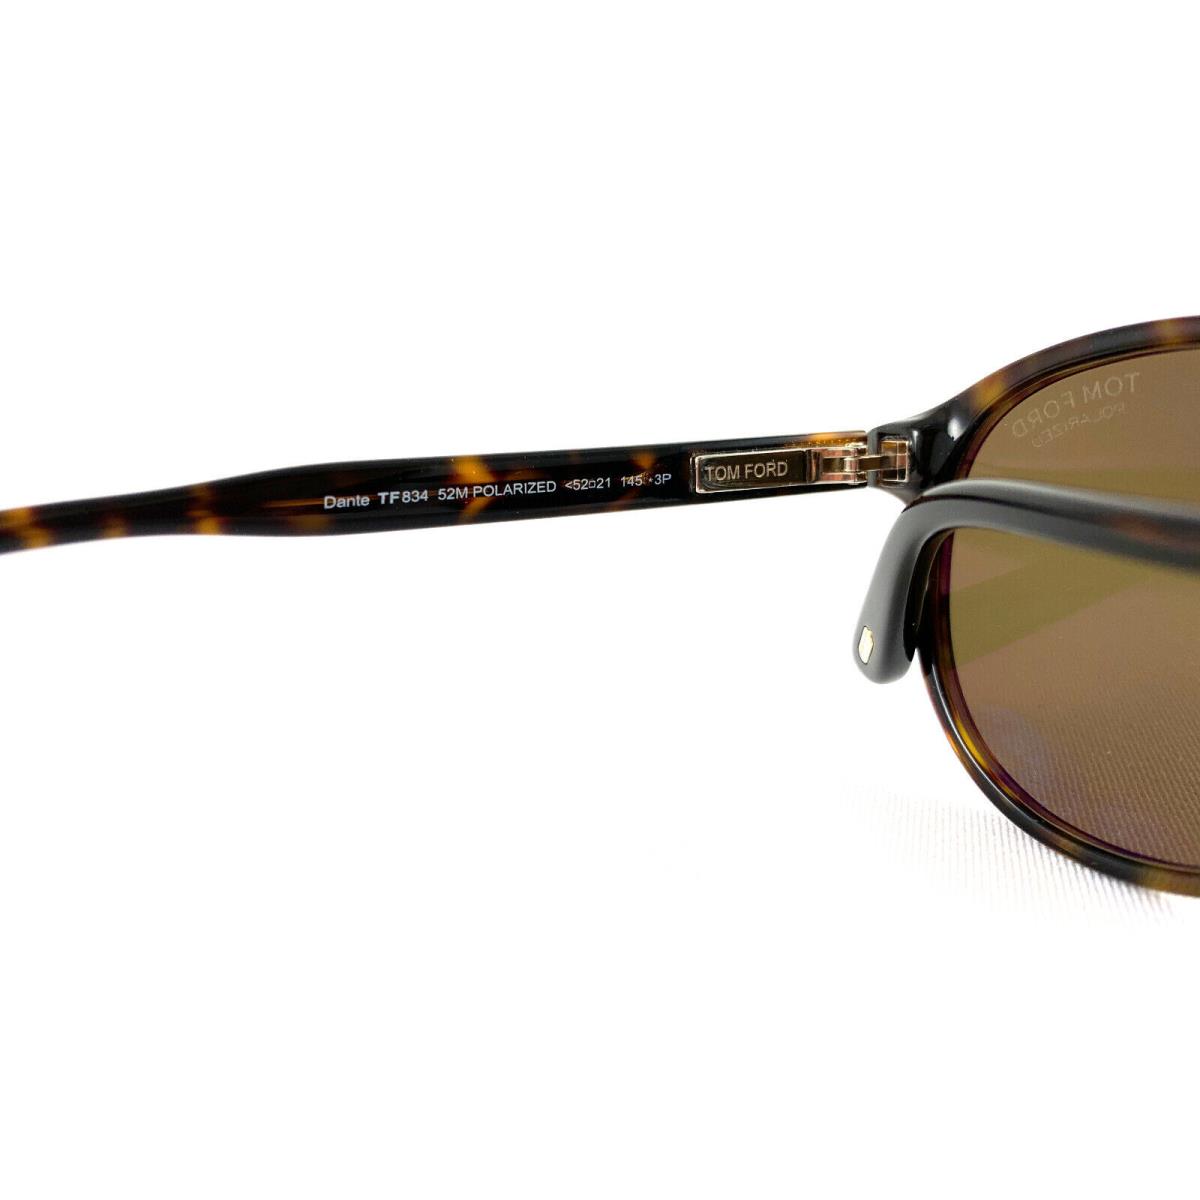 Tom Ford Sunglasses TF834 Dante 52M Tortoise Brown Polarized FT0834/S 52mm  - Tom Ford sunglasses - 026658822368 | Fash Brands